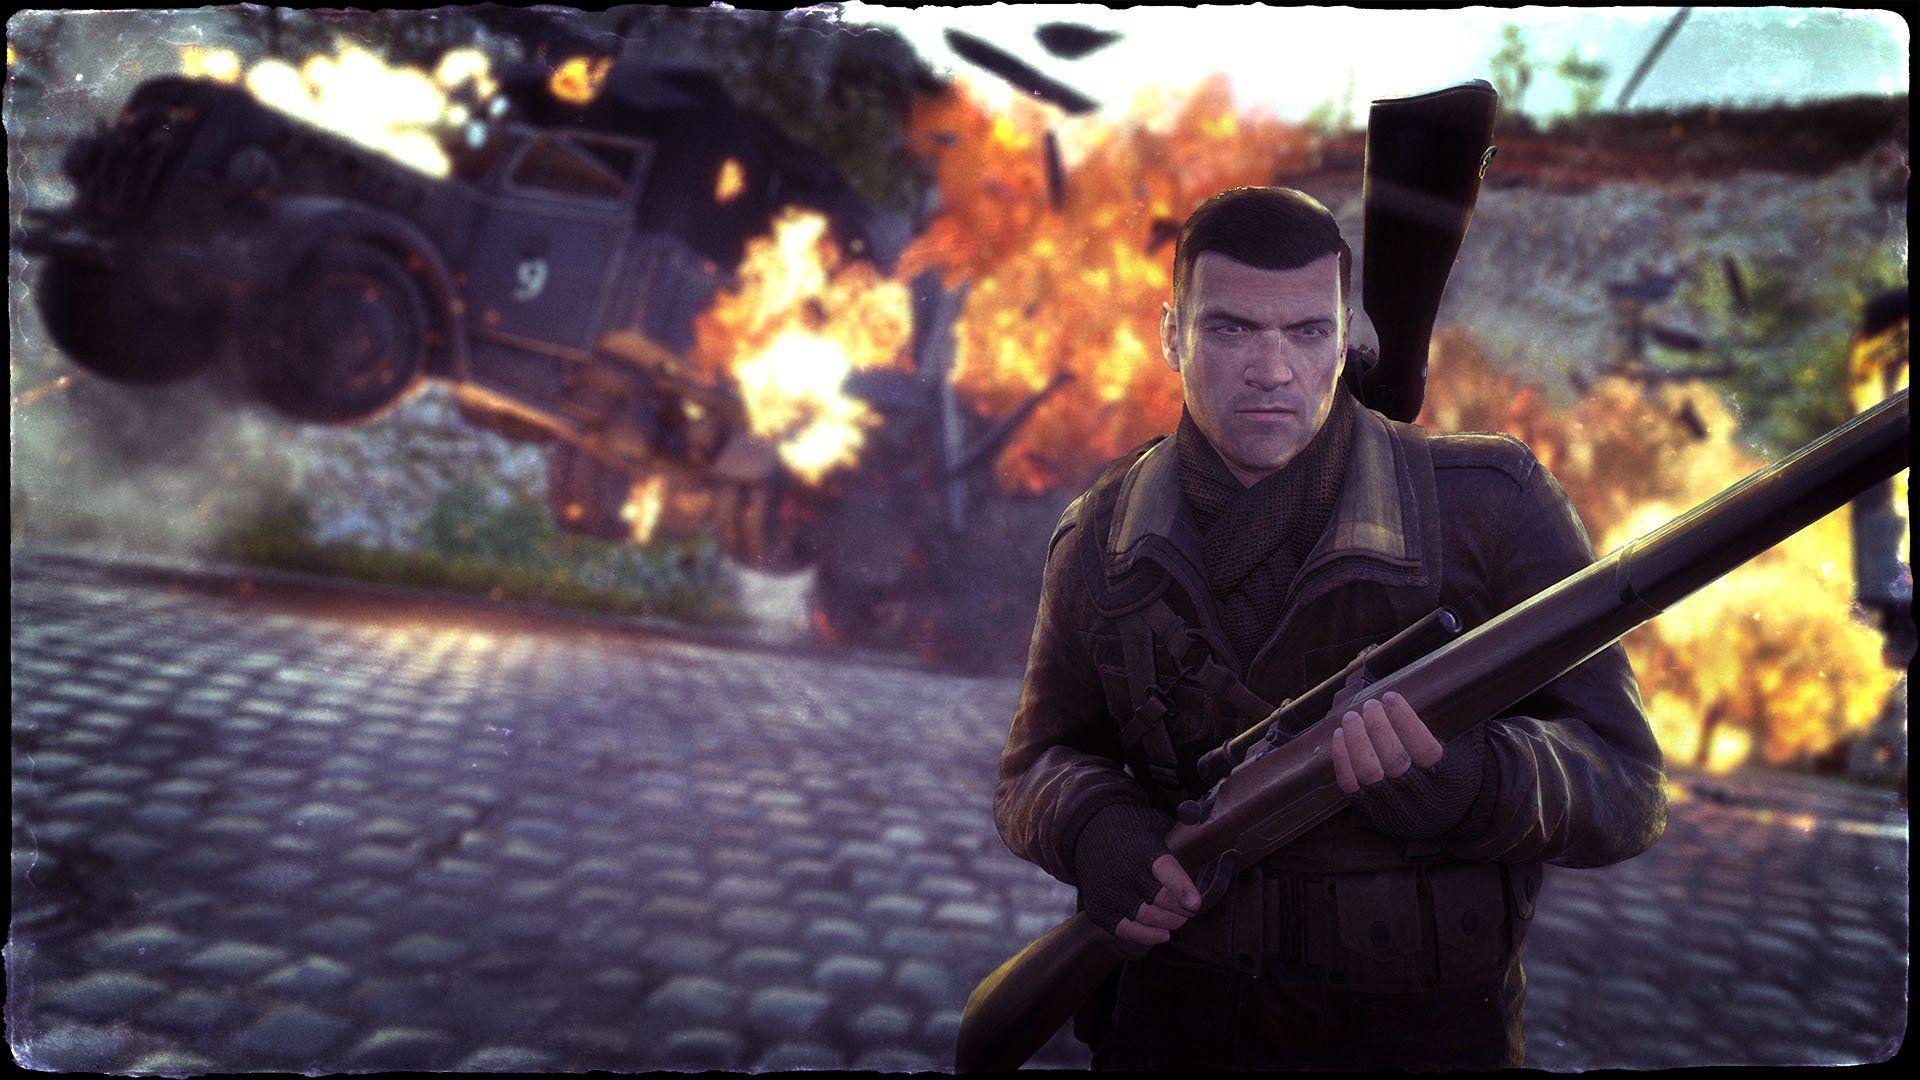 Sniper Elite 4 HD Wallpaper. Read games reviews, play online games